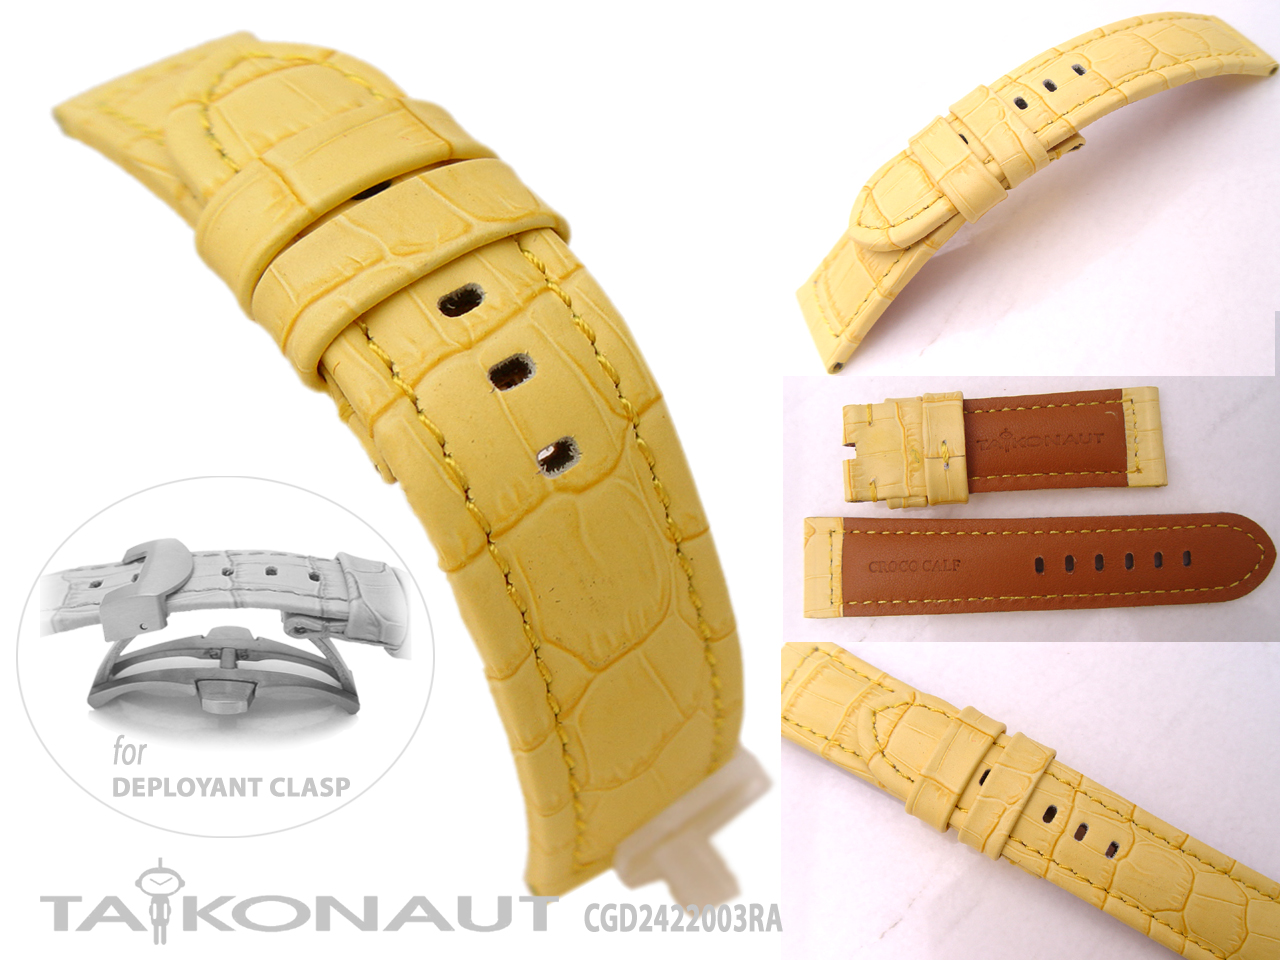 (CGD242200ZZ003)CrocoCalf (Croco Grain) in Light Yellow 24mm Deployant Watch Strap